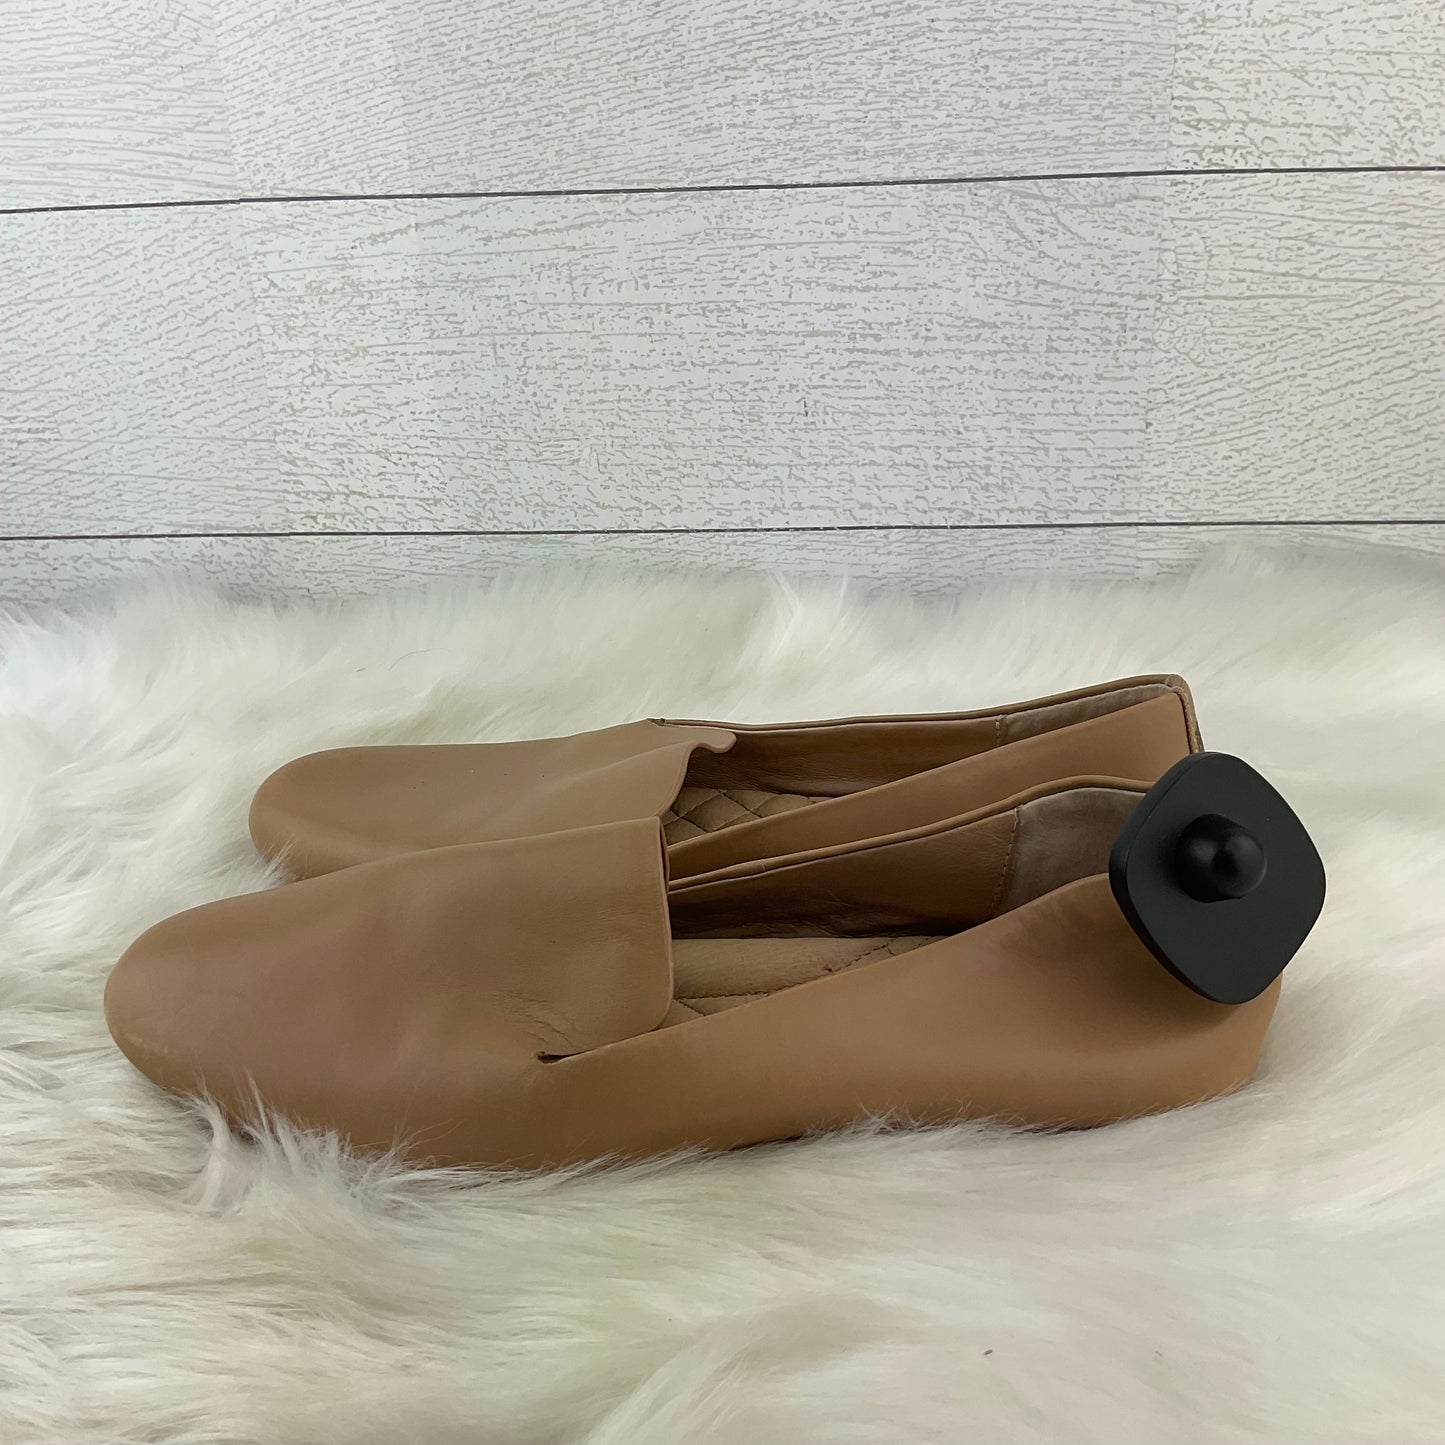 Tan Shoes Flats Clothes Mentor, Size 7.5